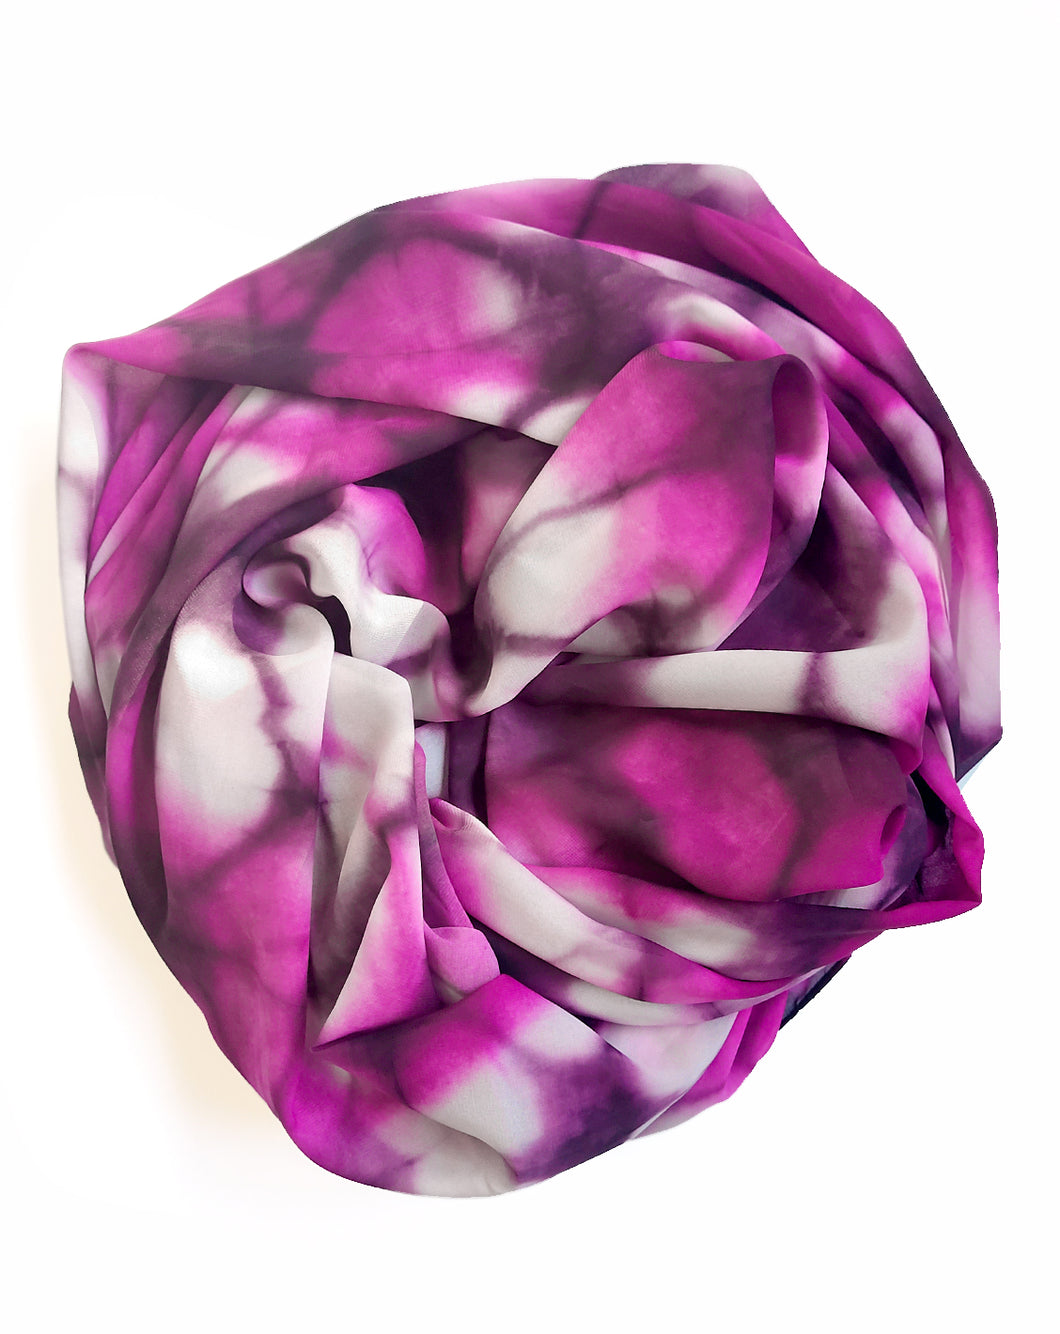 Bundled fuchsia, purple, and white scarf.